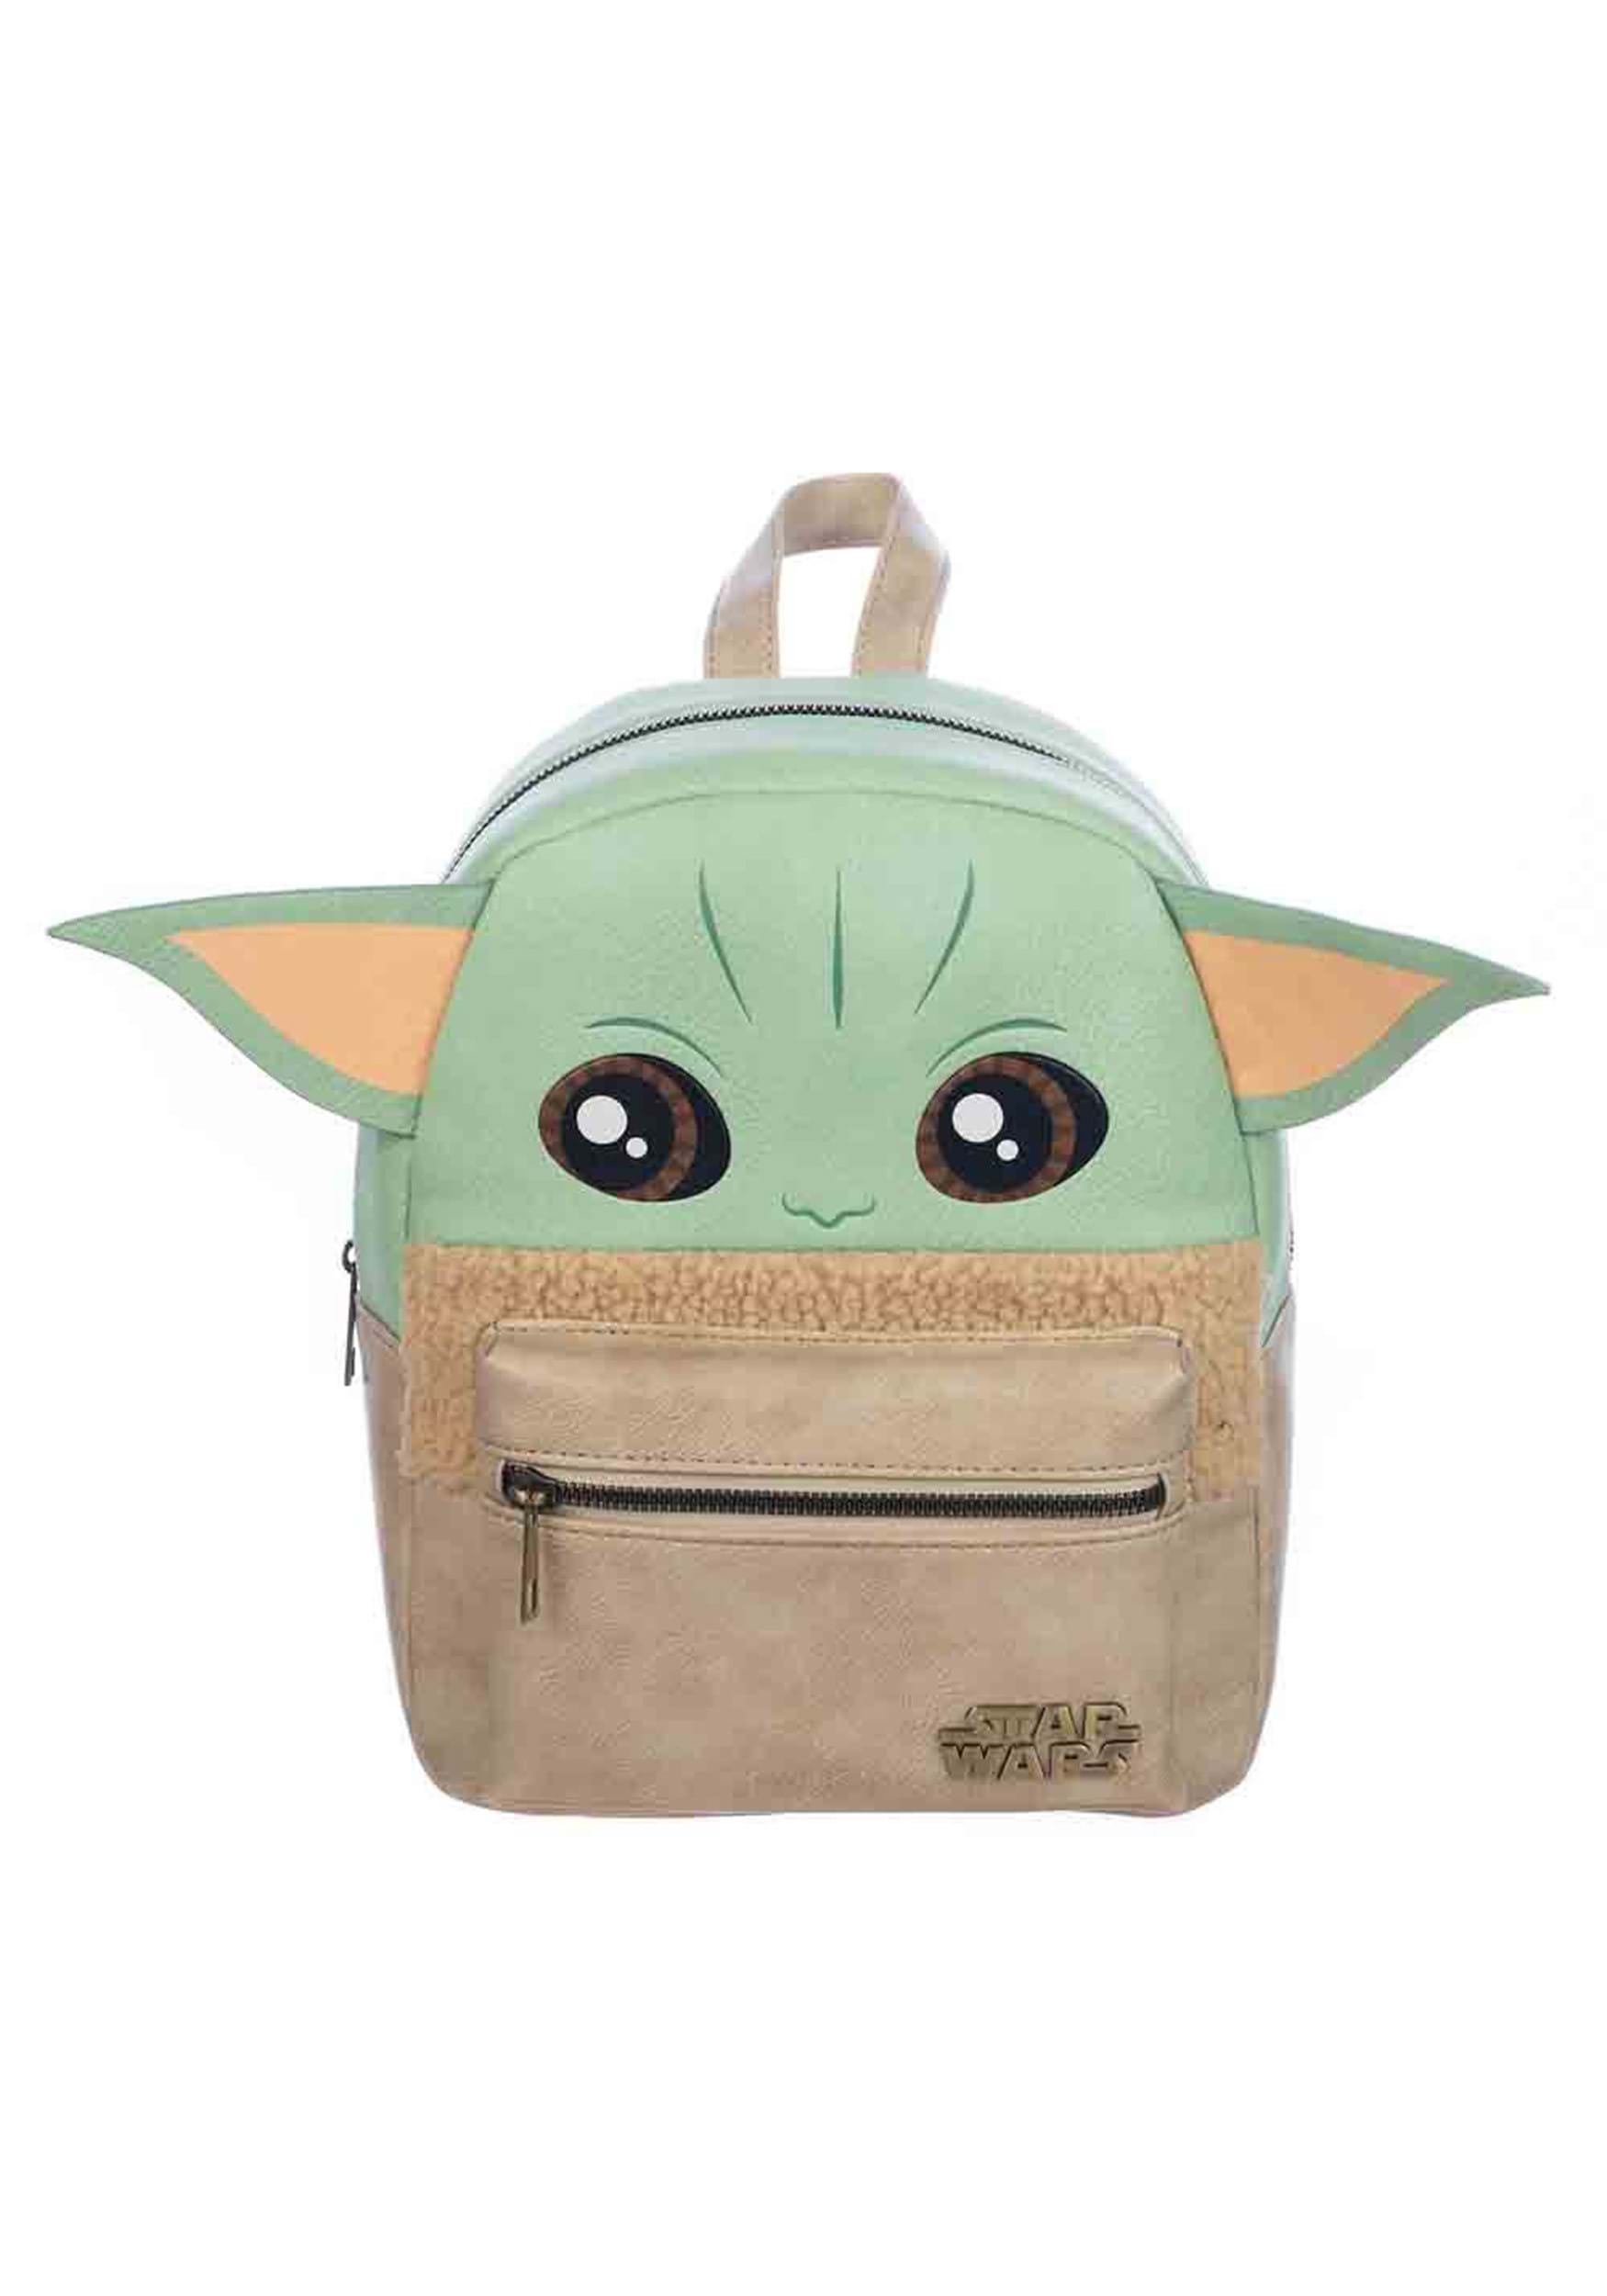 https://images.fun.com/products/78231/1-1/star-wars-the-mandalorian-grogu-mini-backpack.jpg